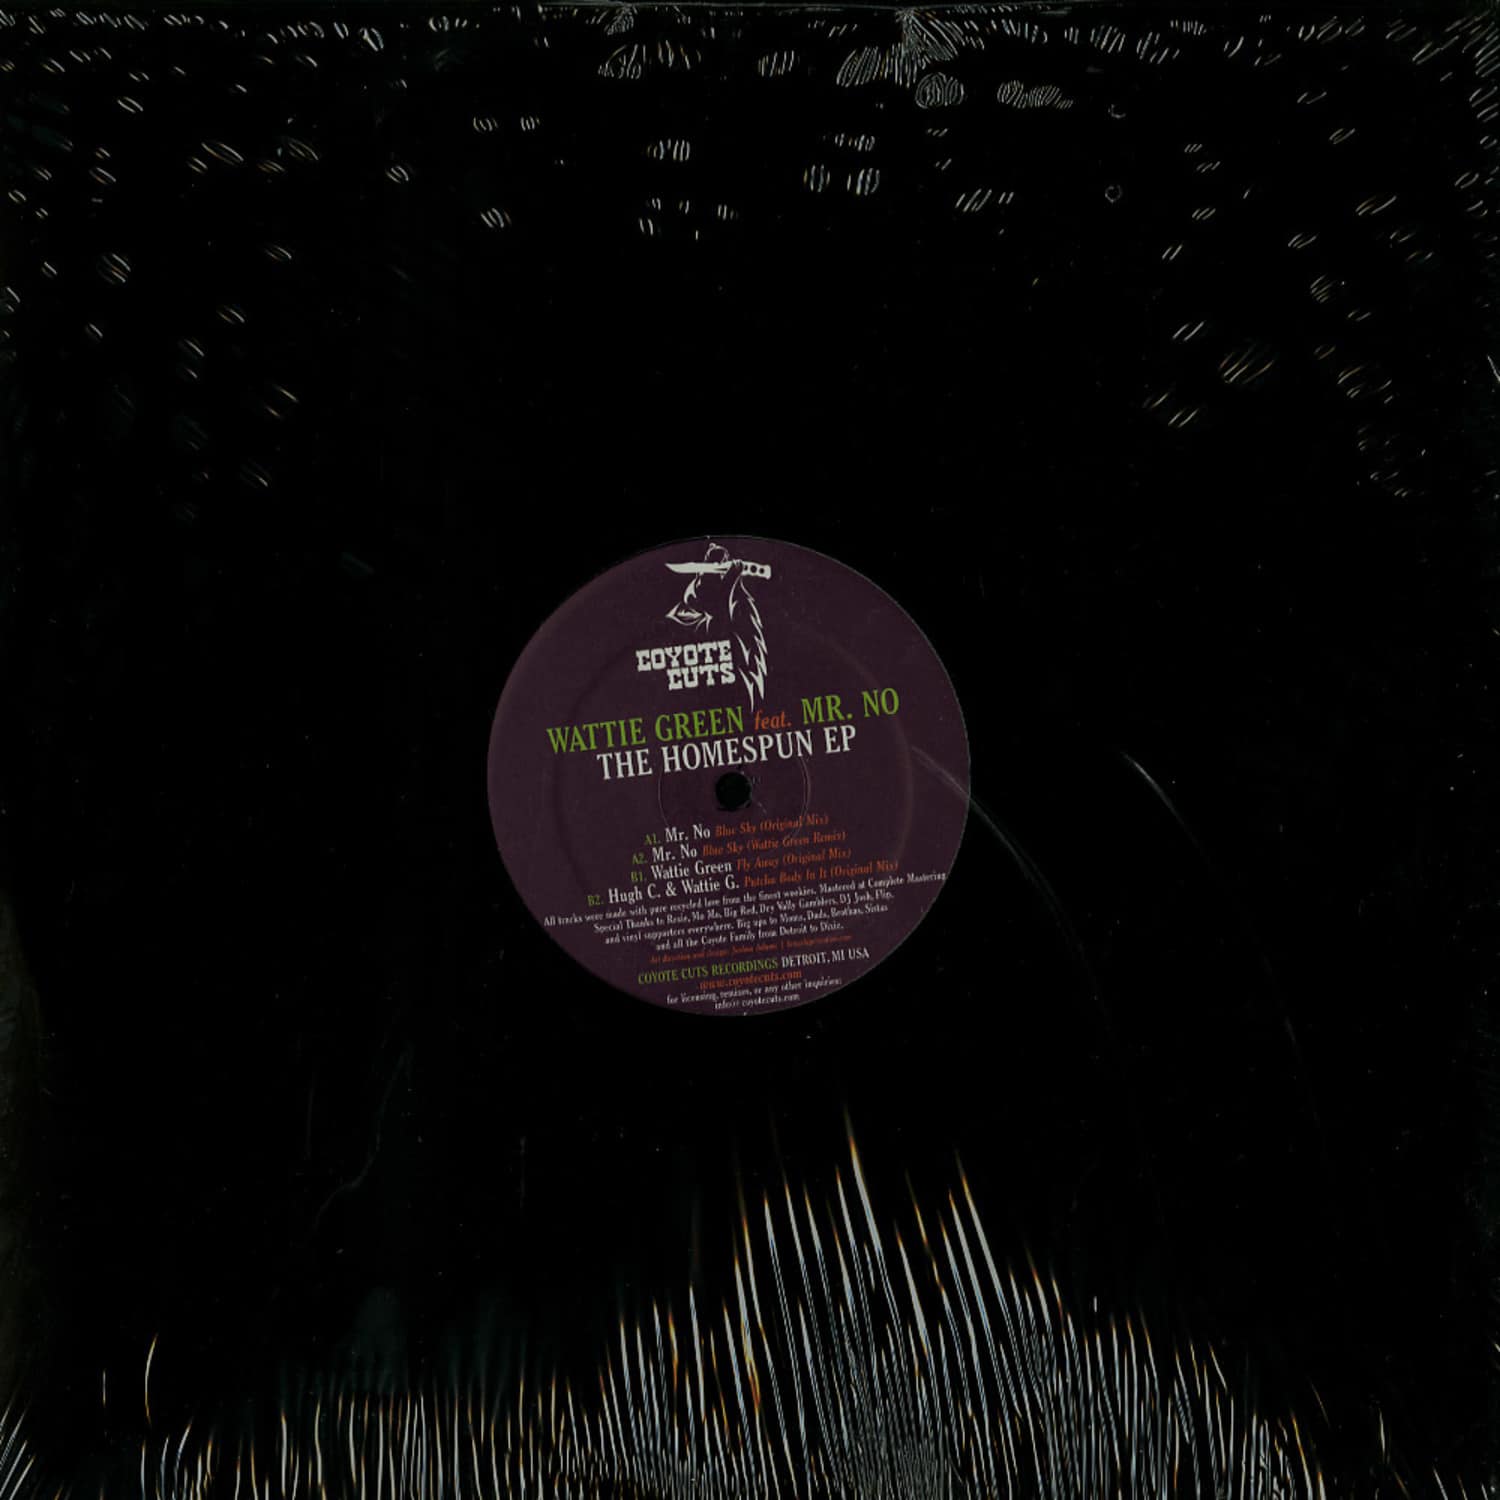 Wattie Green ft. Mr. No - THE HOMESPUN EP